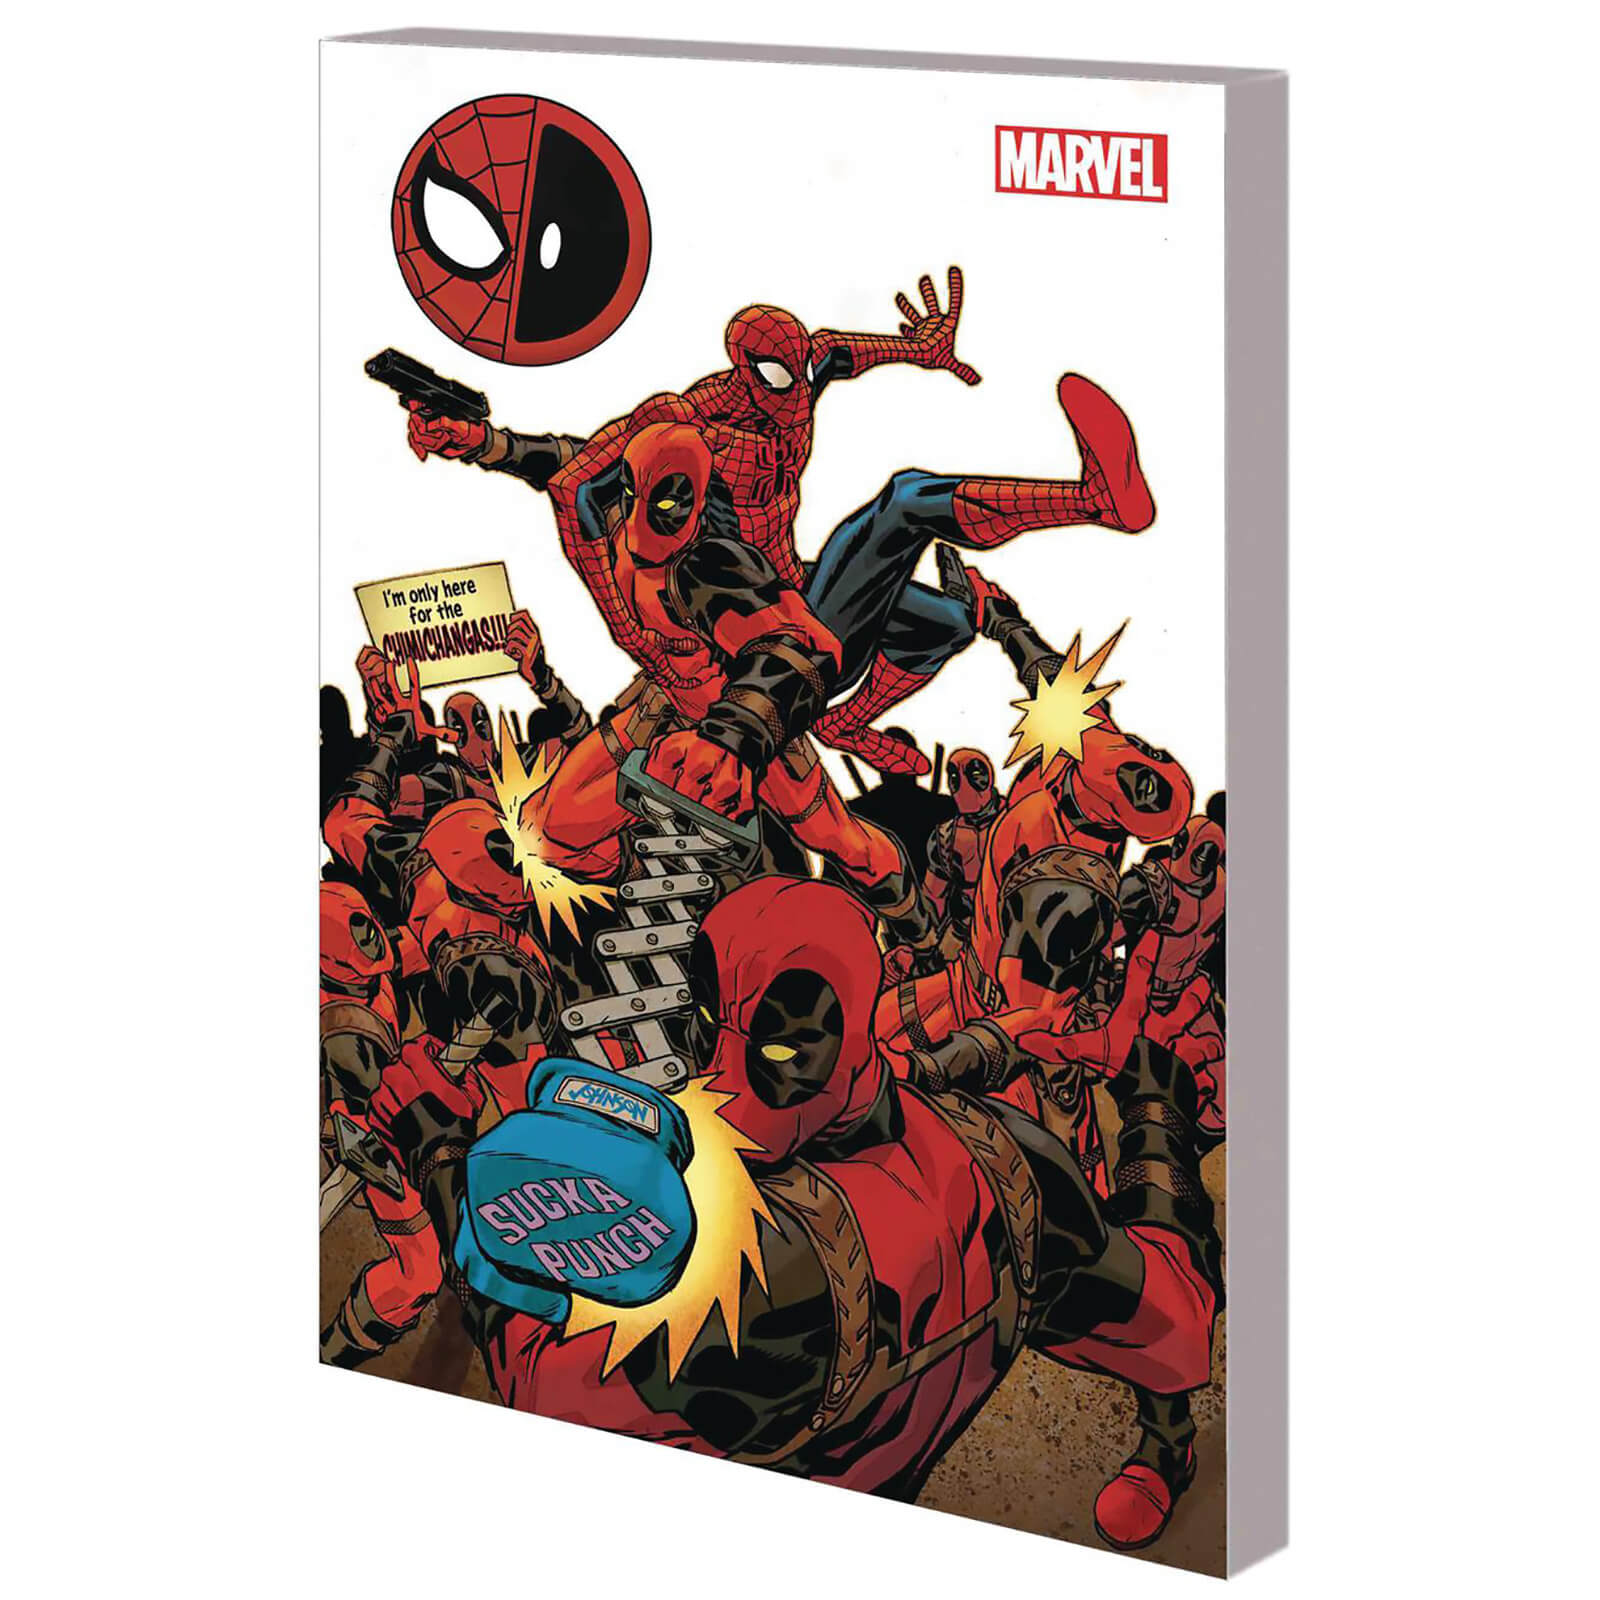 Marvel Comics Spider-man Deadpool Trade Paperback Vol 06 Wlmd Graphic Novel